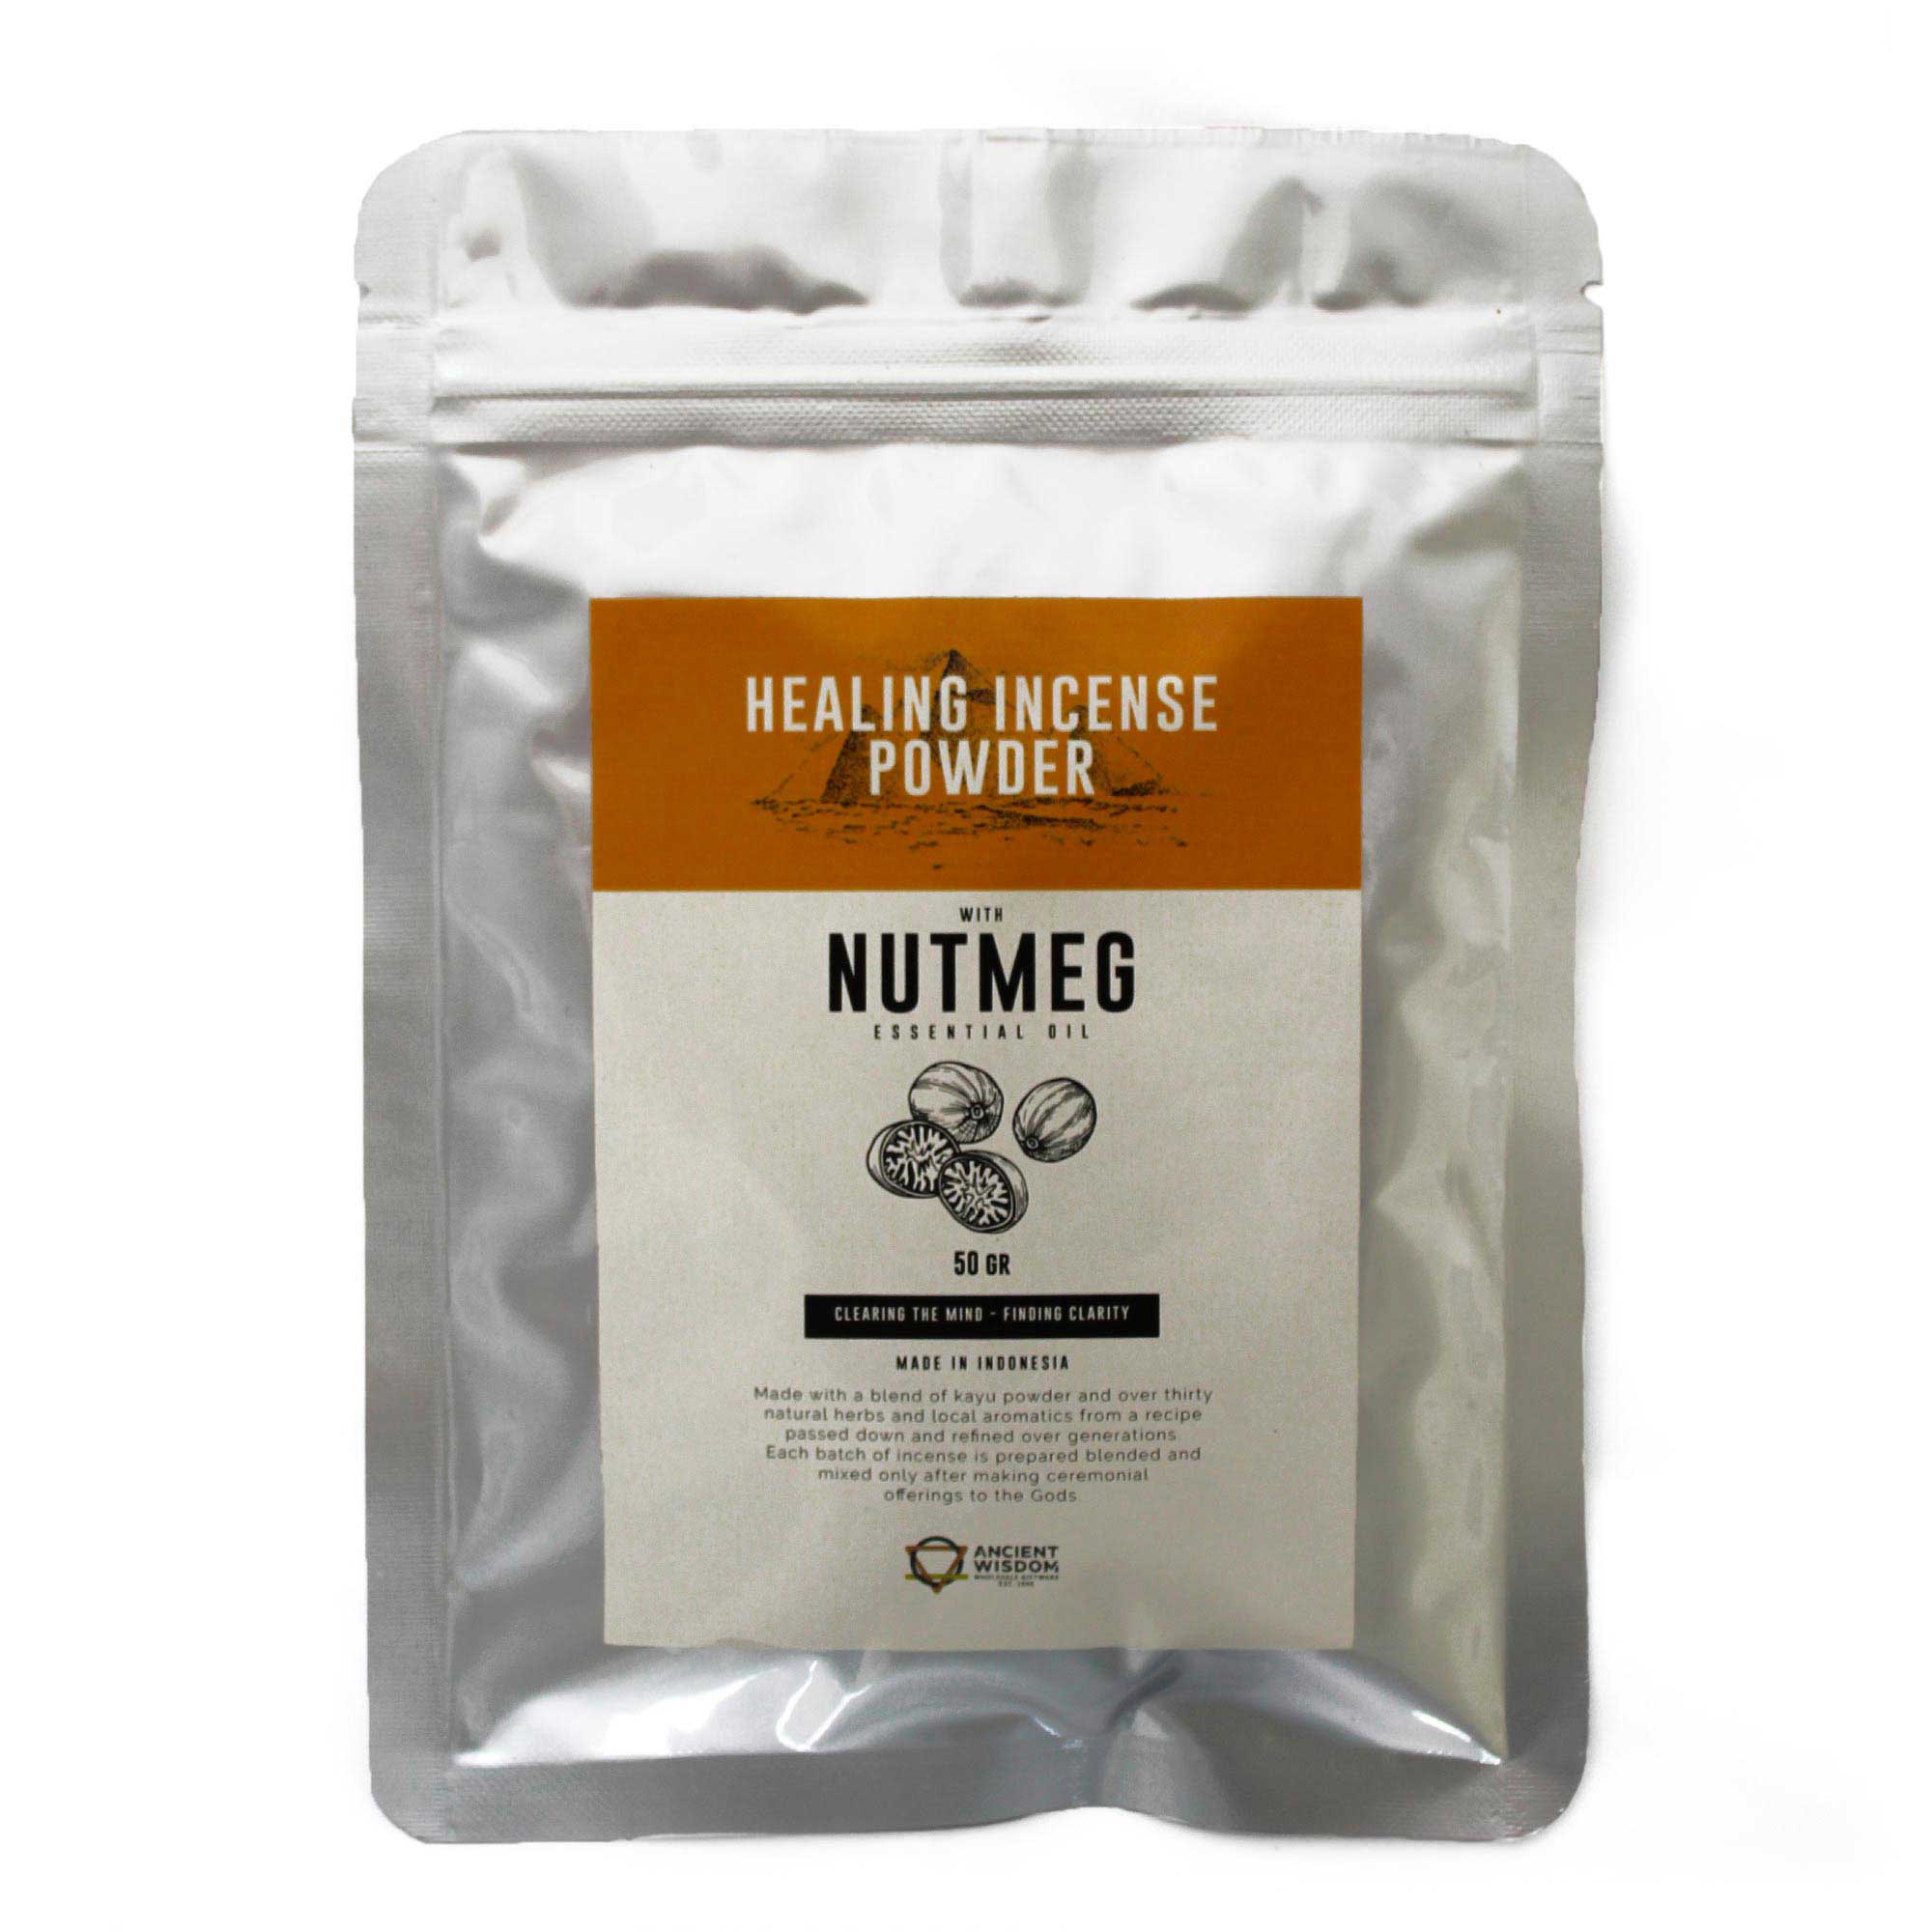 View Healing Incense Powder Nutmeg 50gm information